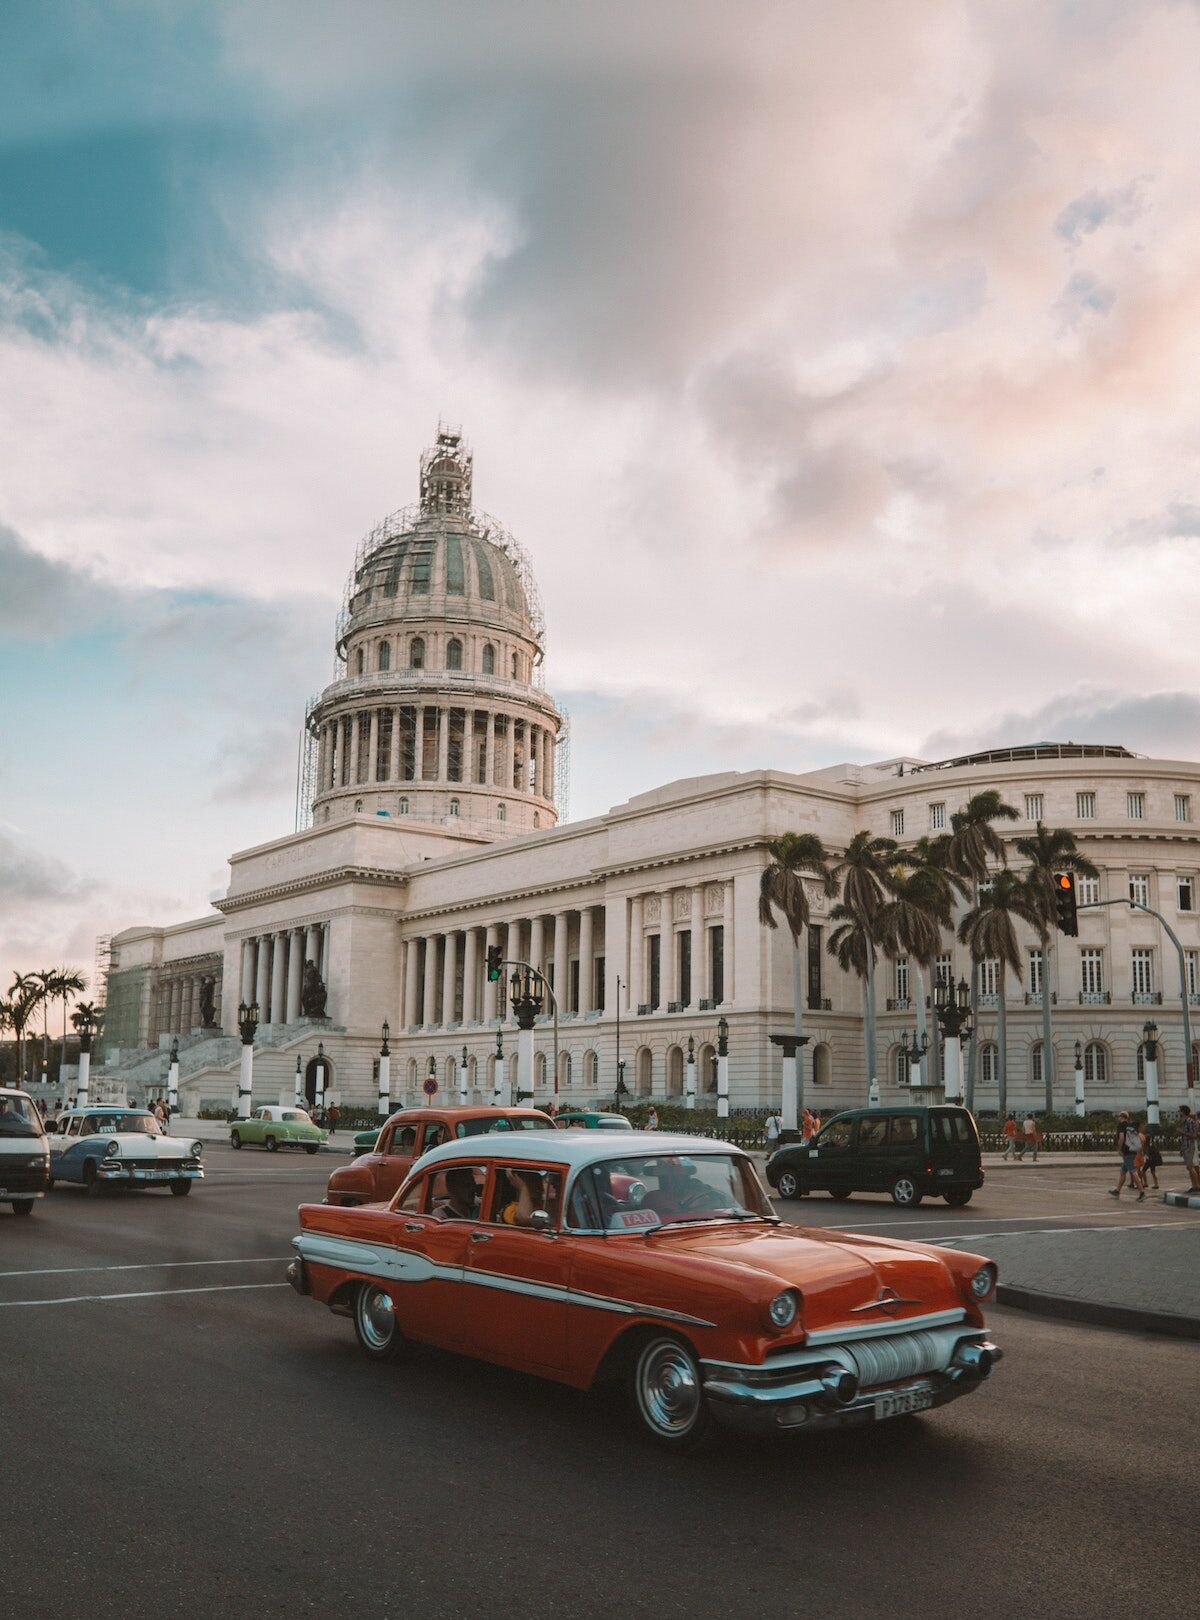 EINDRÜCKE AUTOS Oldtimer in Cuba Havana und Capitol